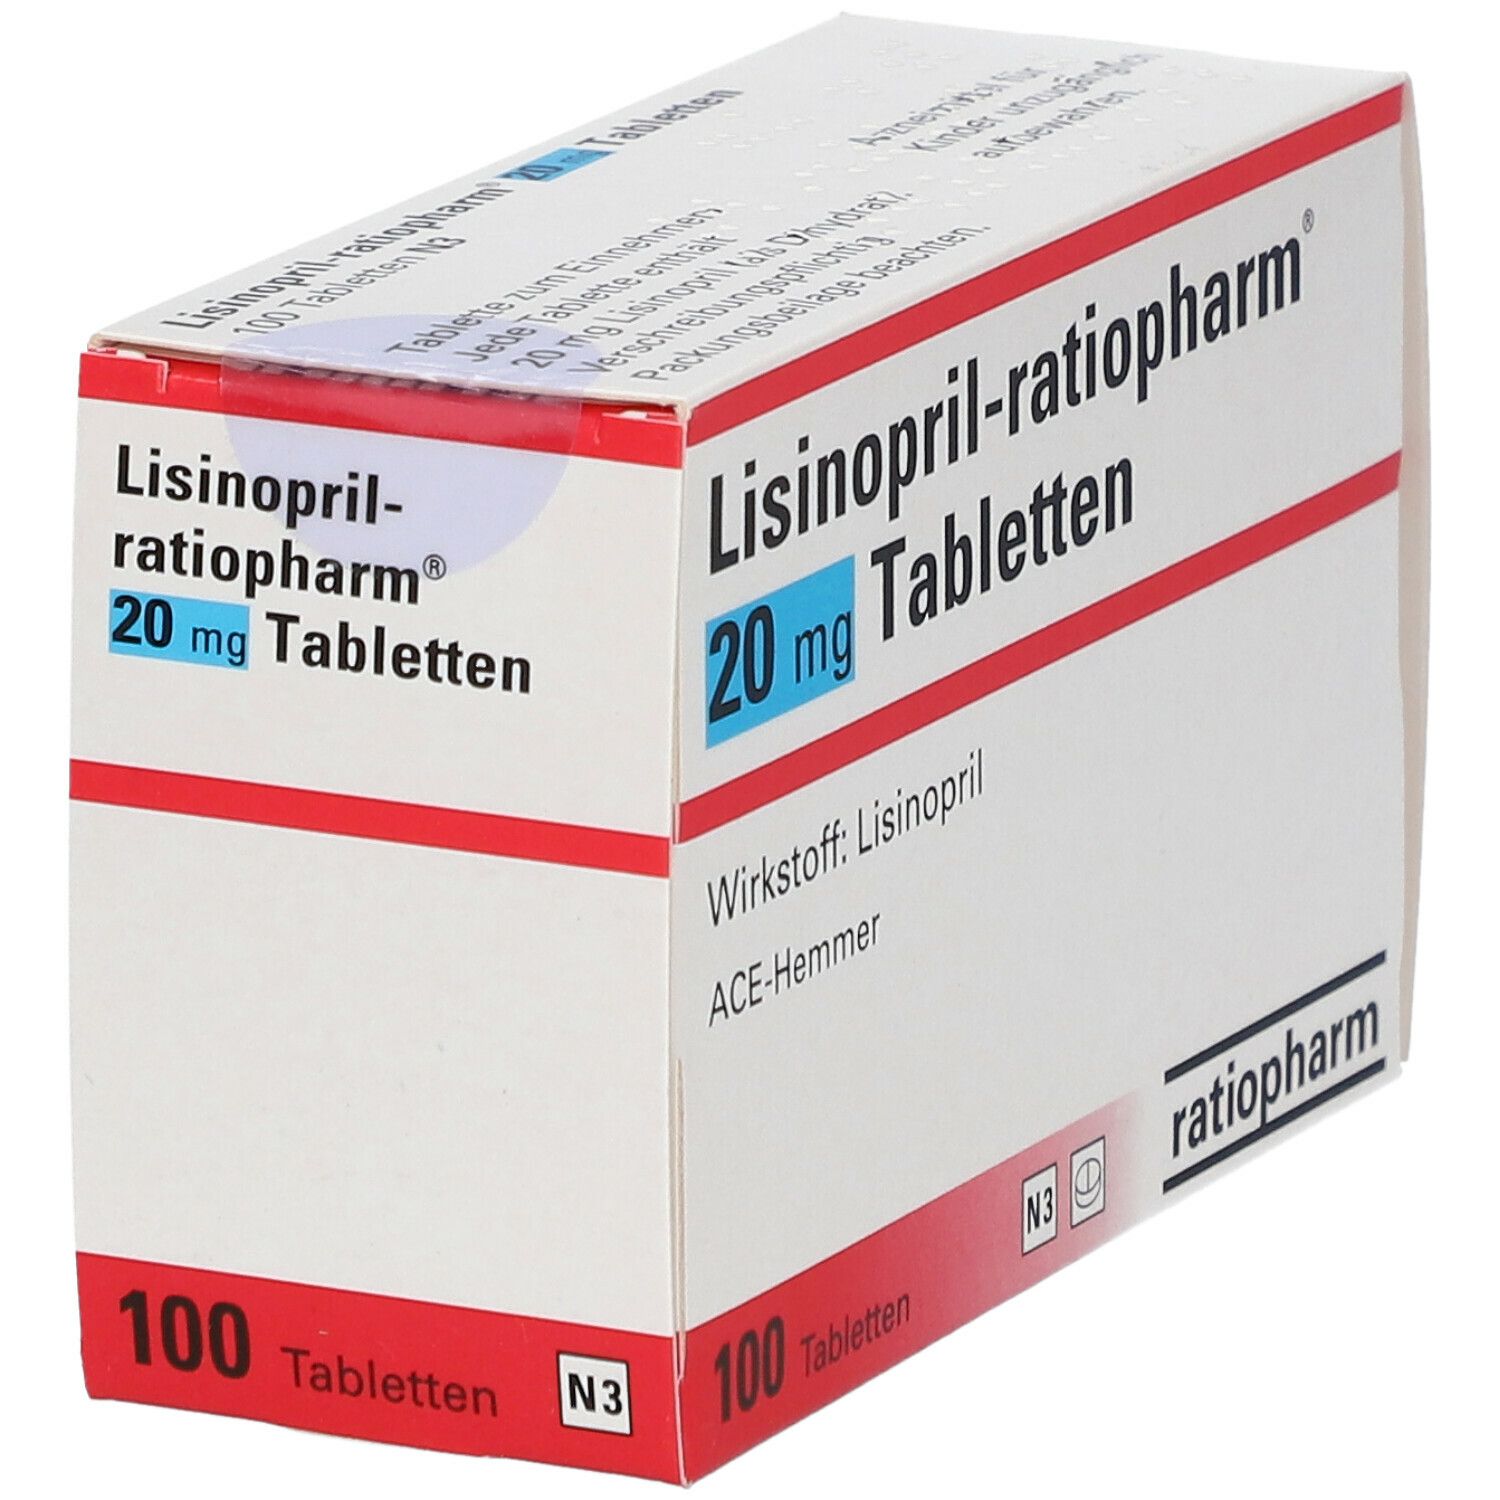 Lisinopril-ratiopharm® 20 mg